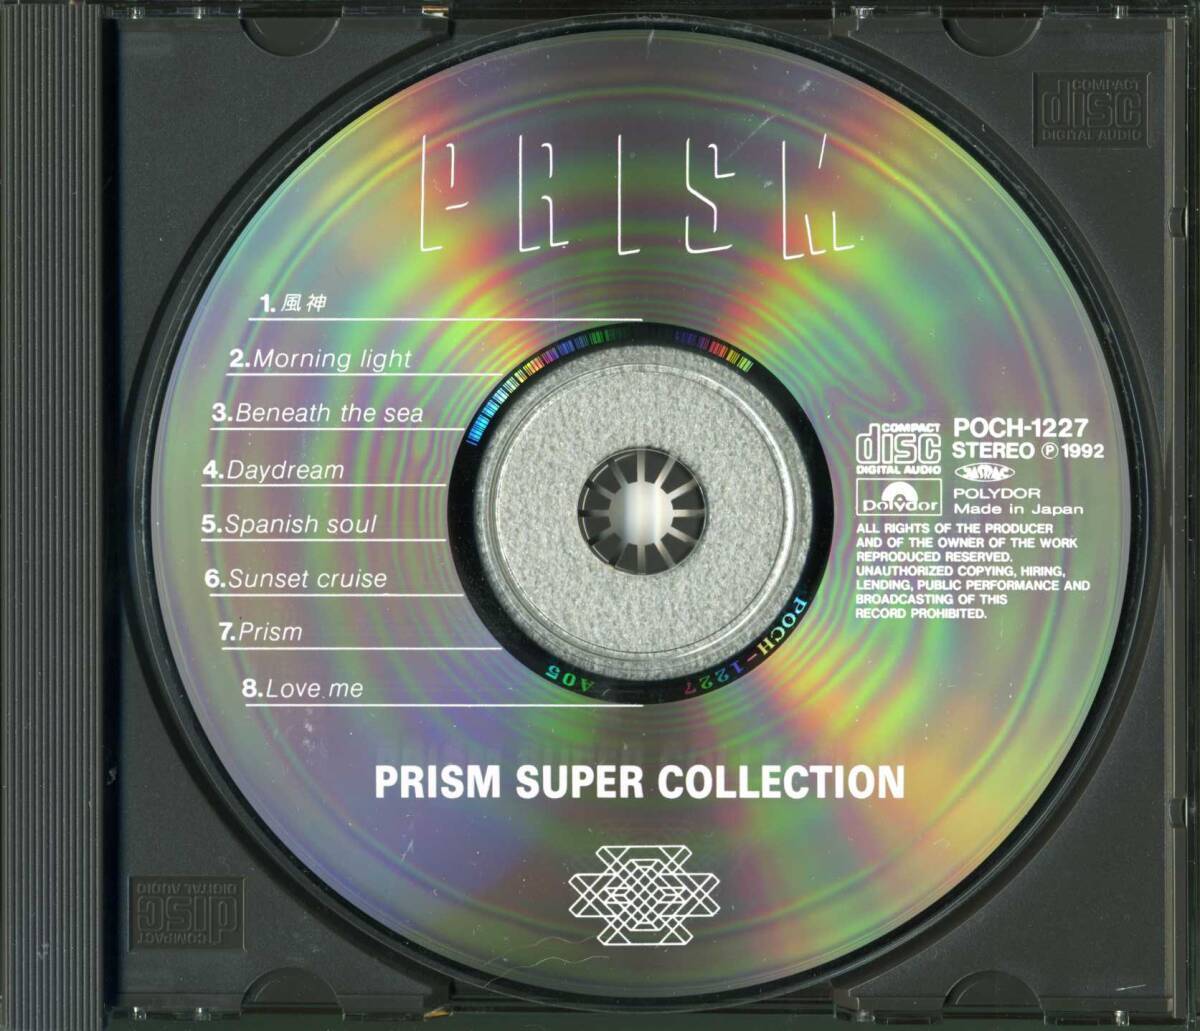 p rhythm *PRISM SUPER COLLECTION